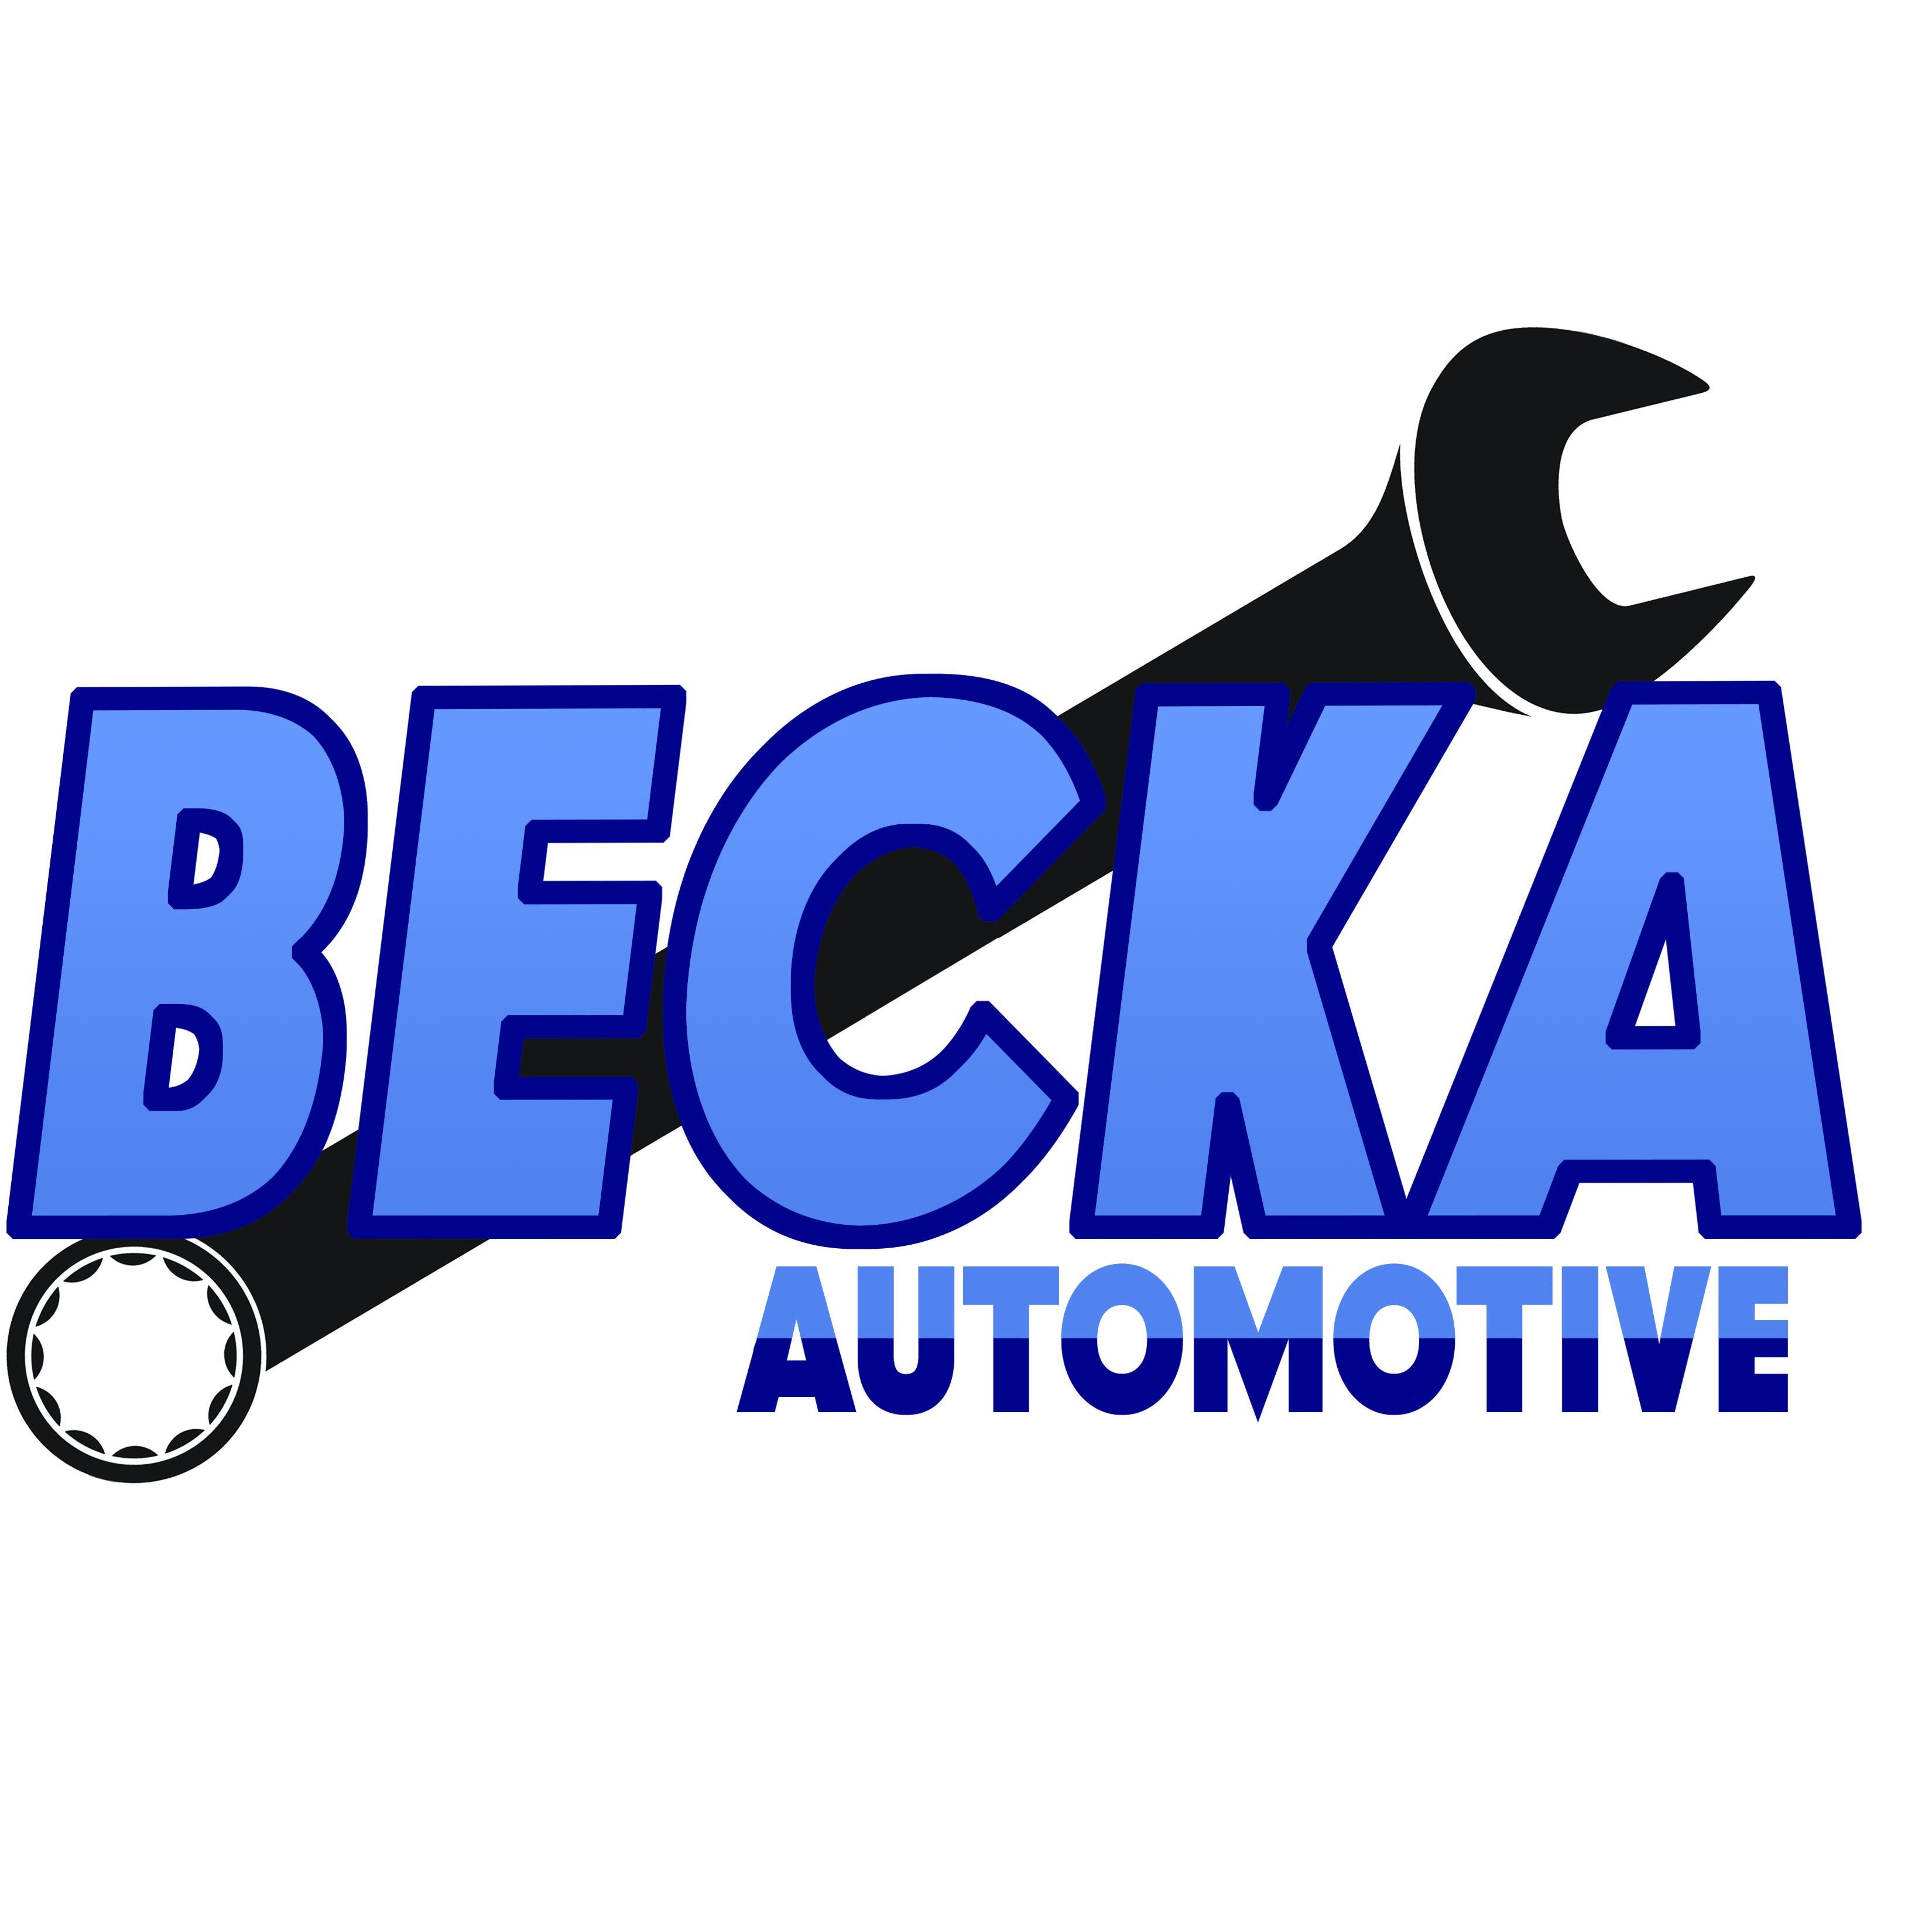 Becka Automotive Logo